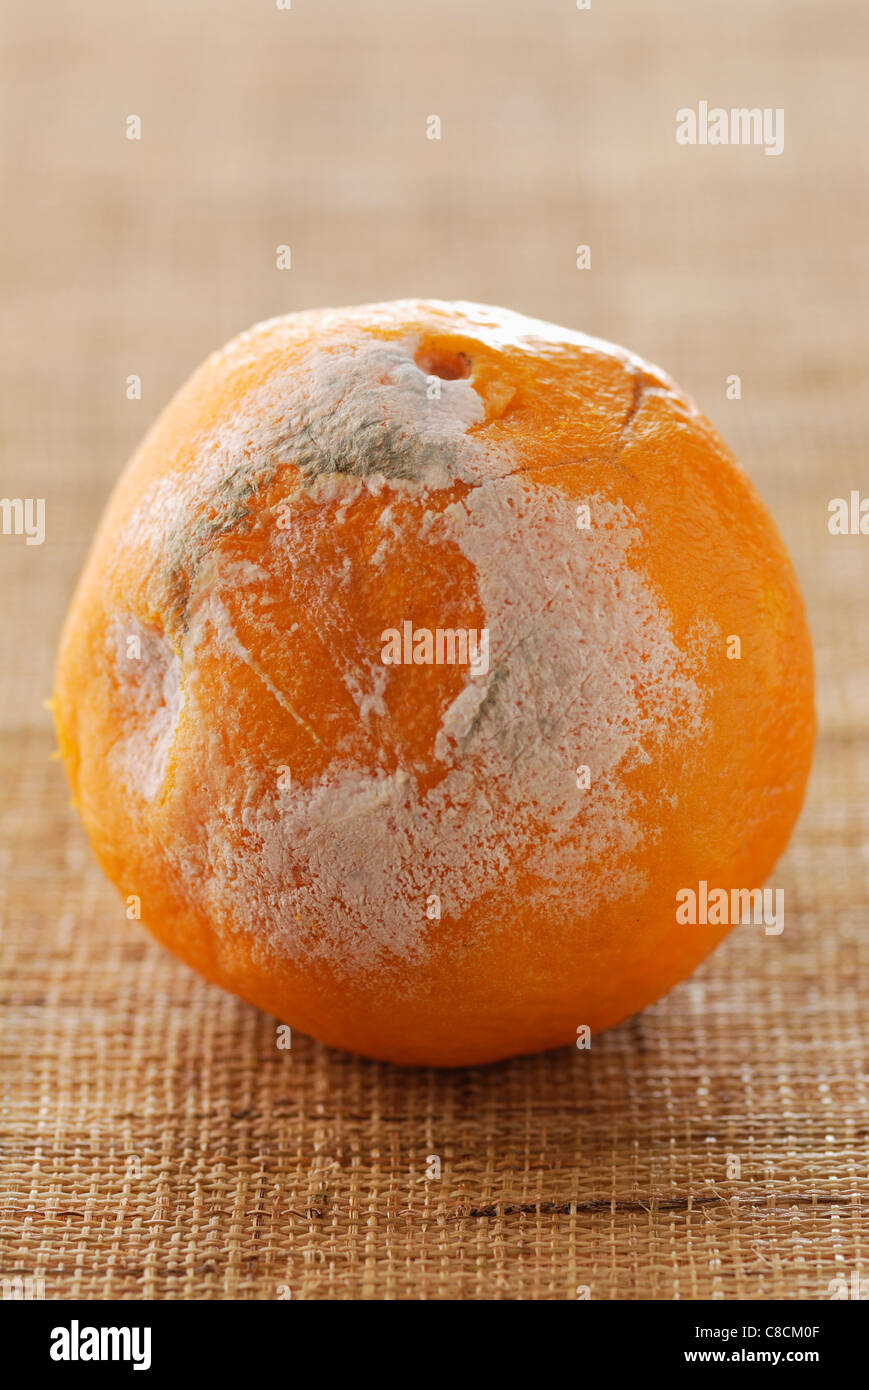 Rotten orange Stock Photo